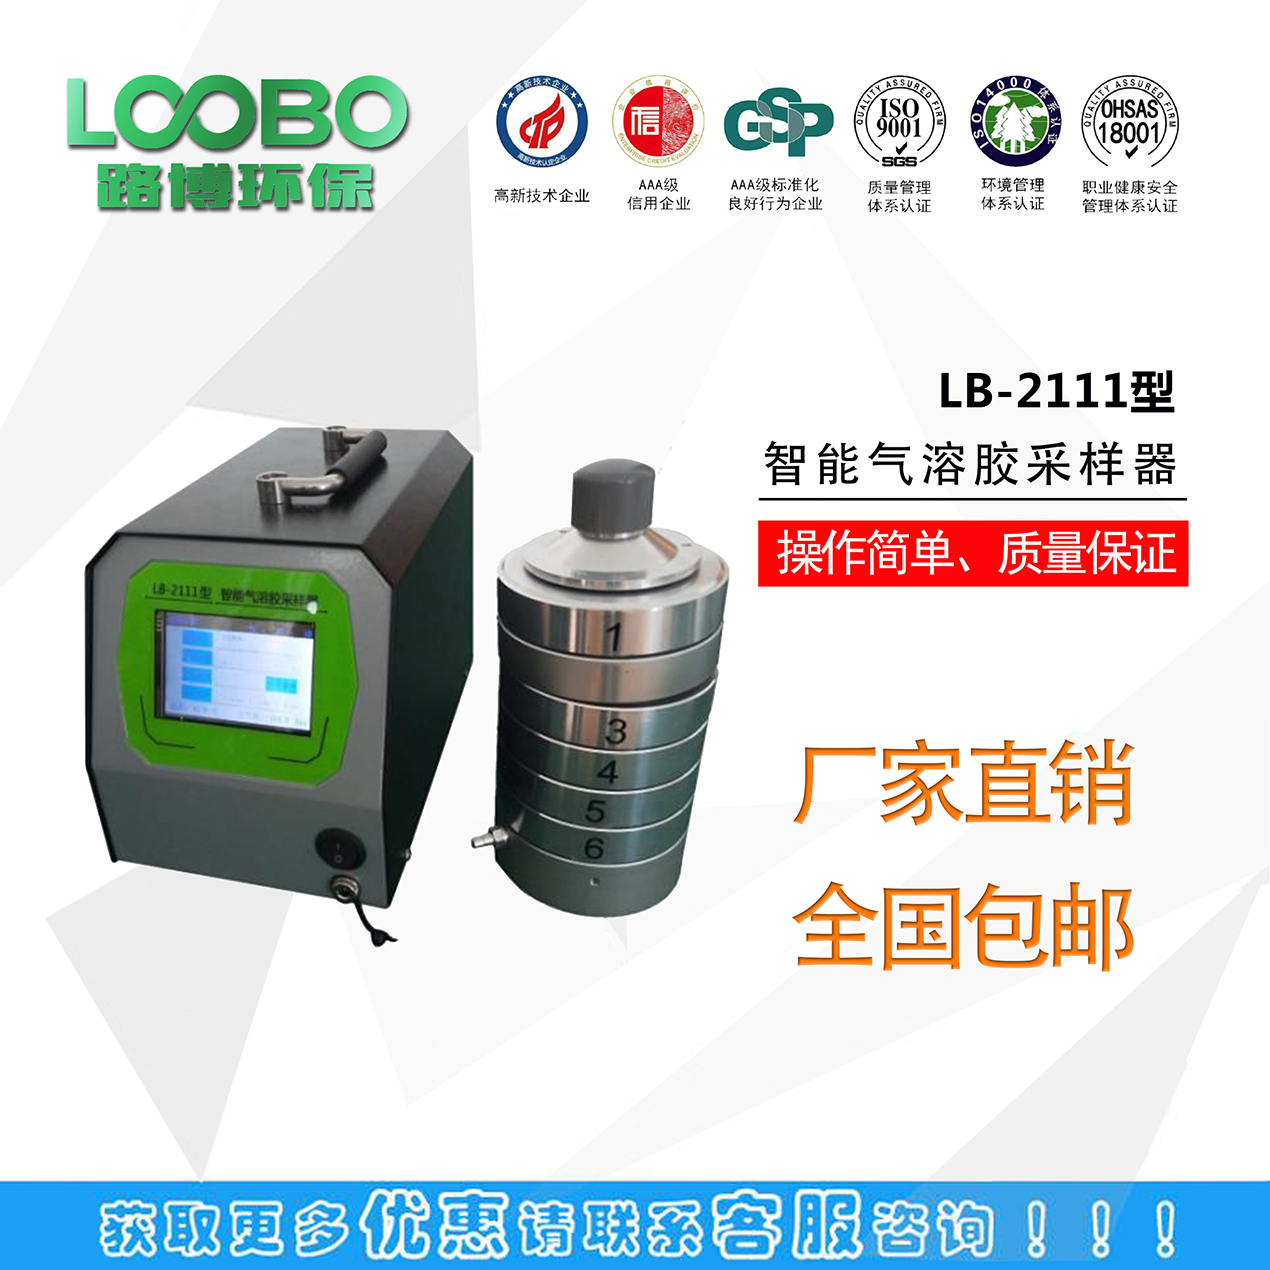 LB-8L真空气袋采样器是一款采集气体样品的专业仪器